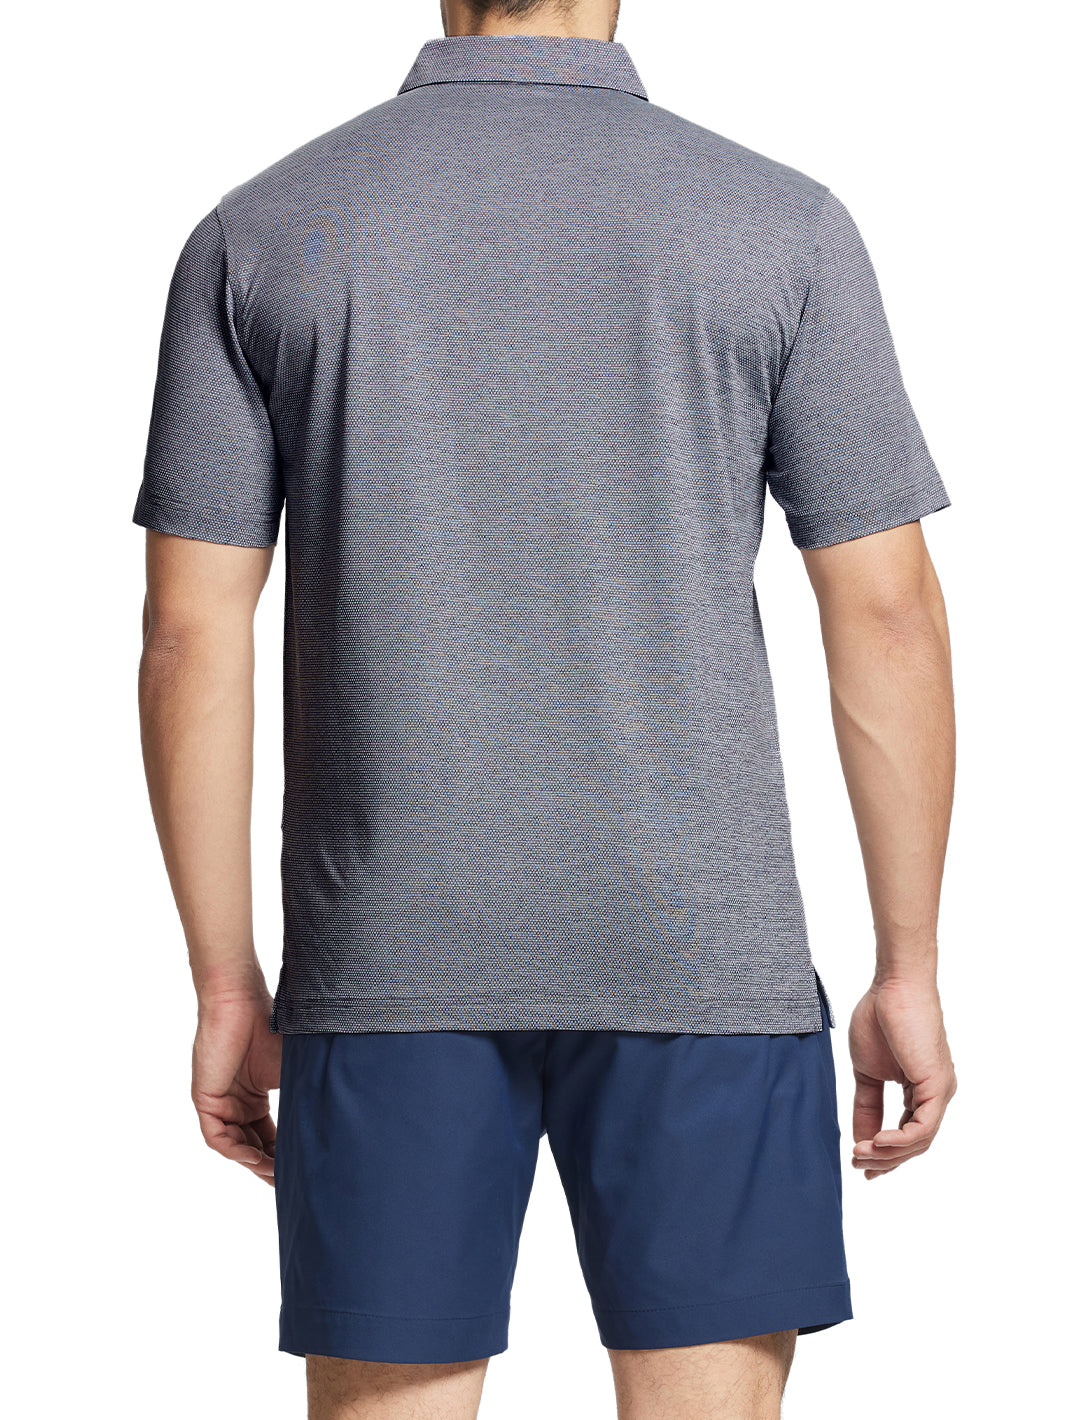 Men's Dry Fit Jacquard Golf Shirts-Navy Heather